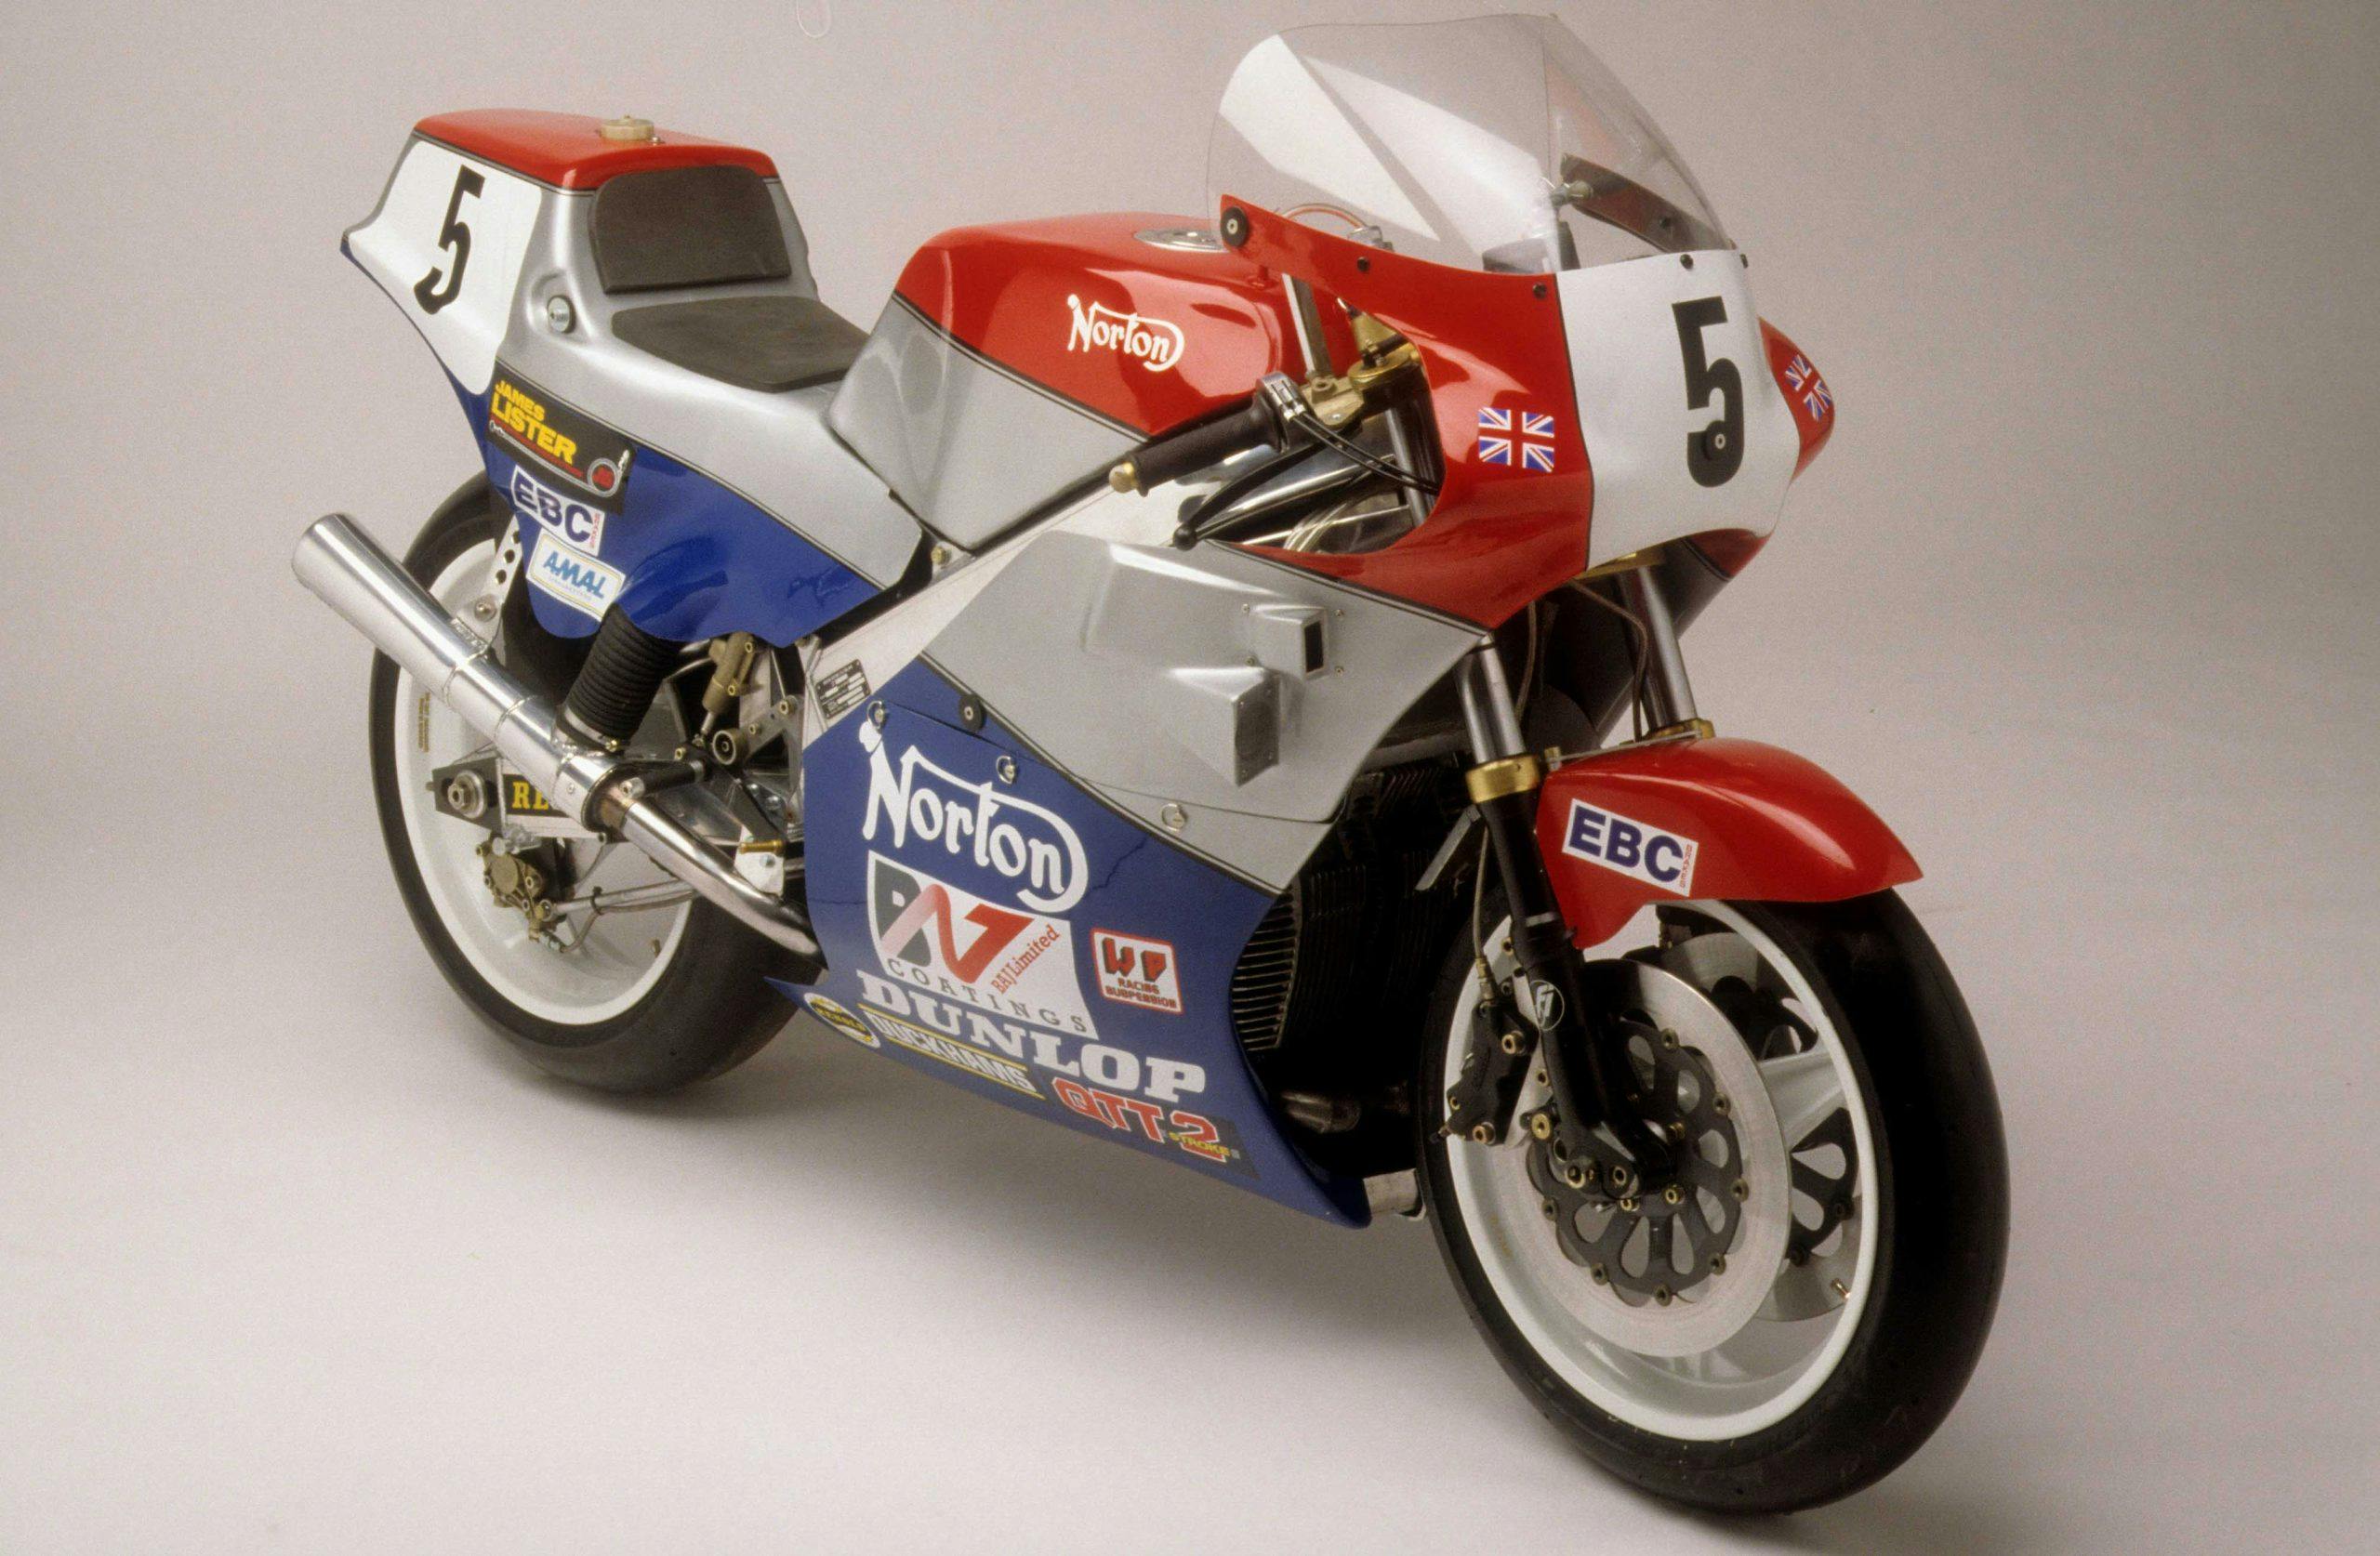 1988 Norton 588 race motorcycle